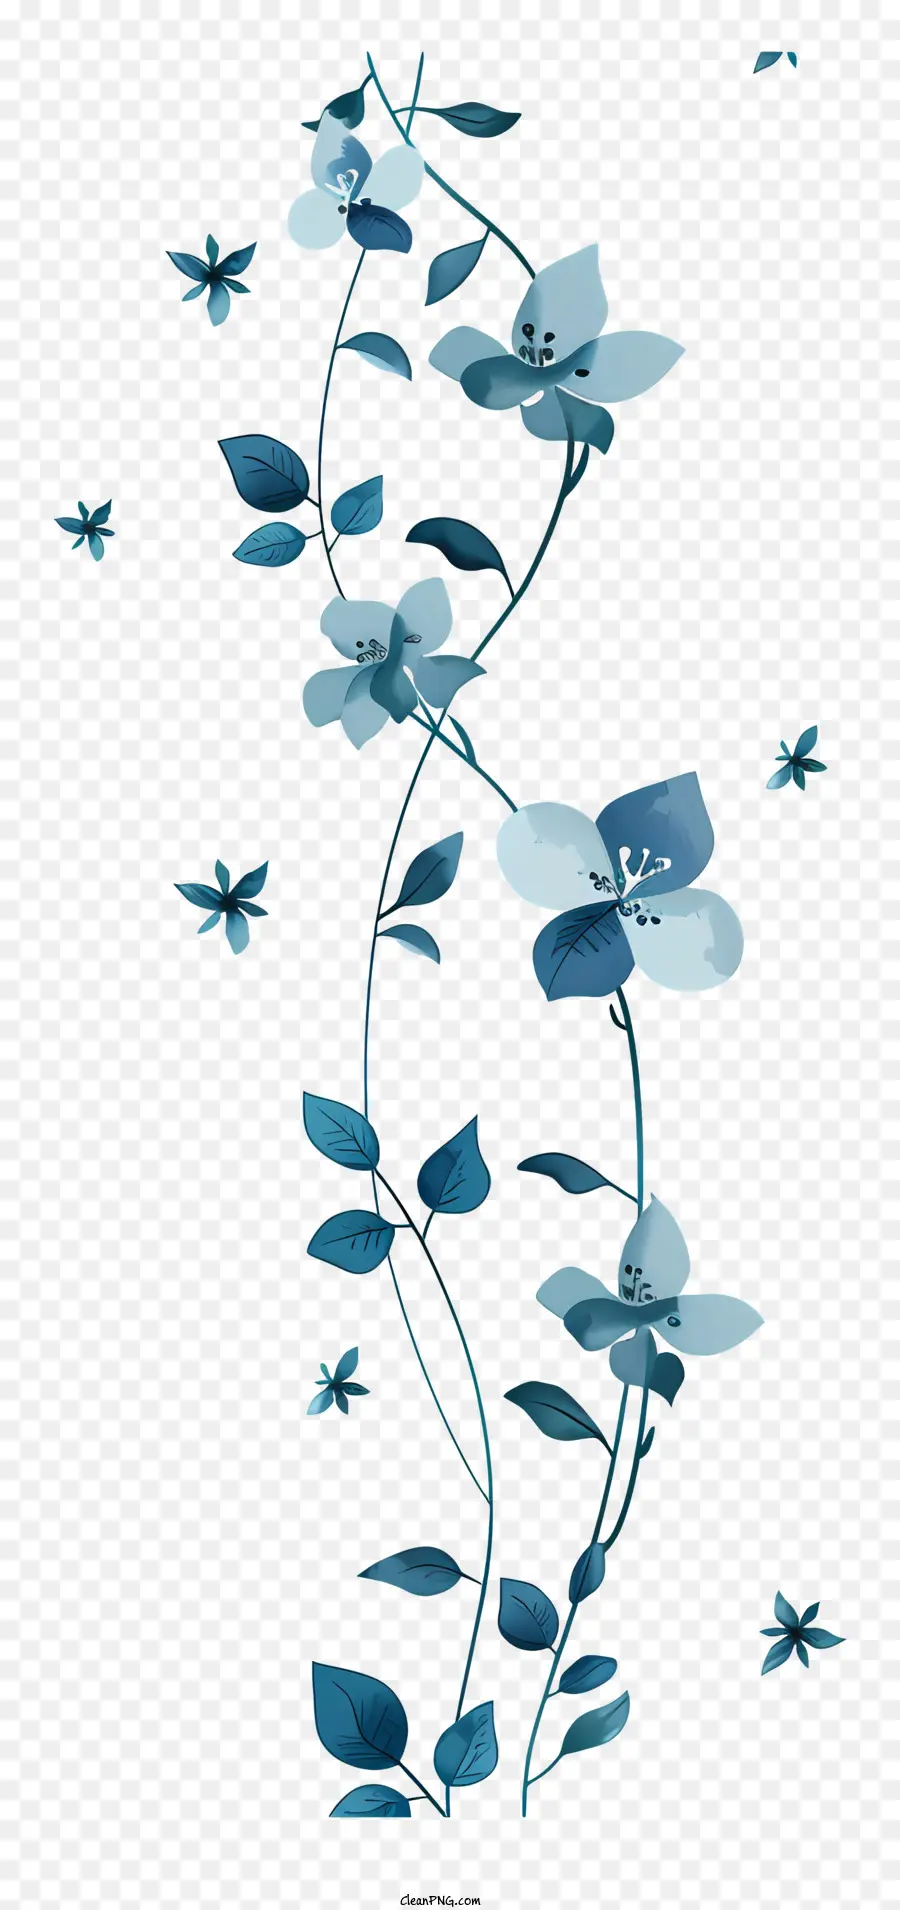 Blumengarten - Blaue Blumenrebe dreht sich um Gitter